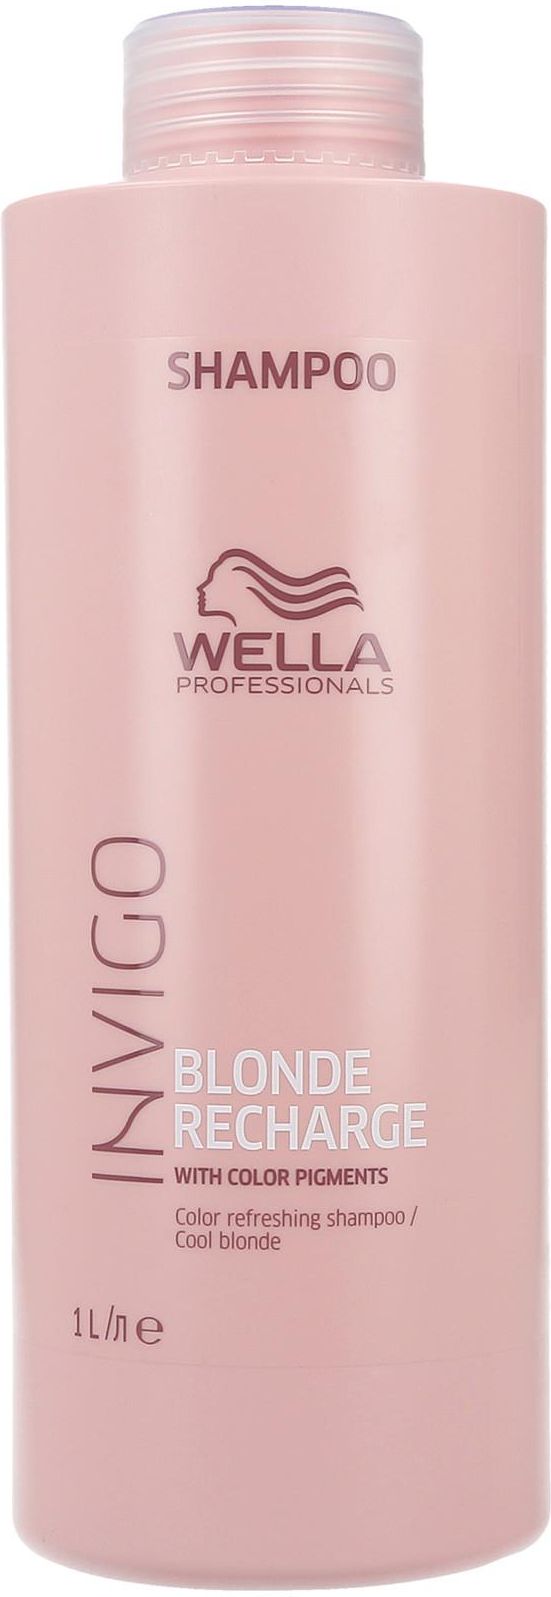 szampon invigo blonde recharge wella